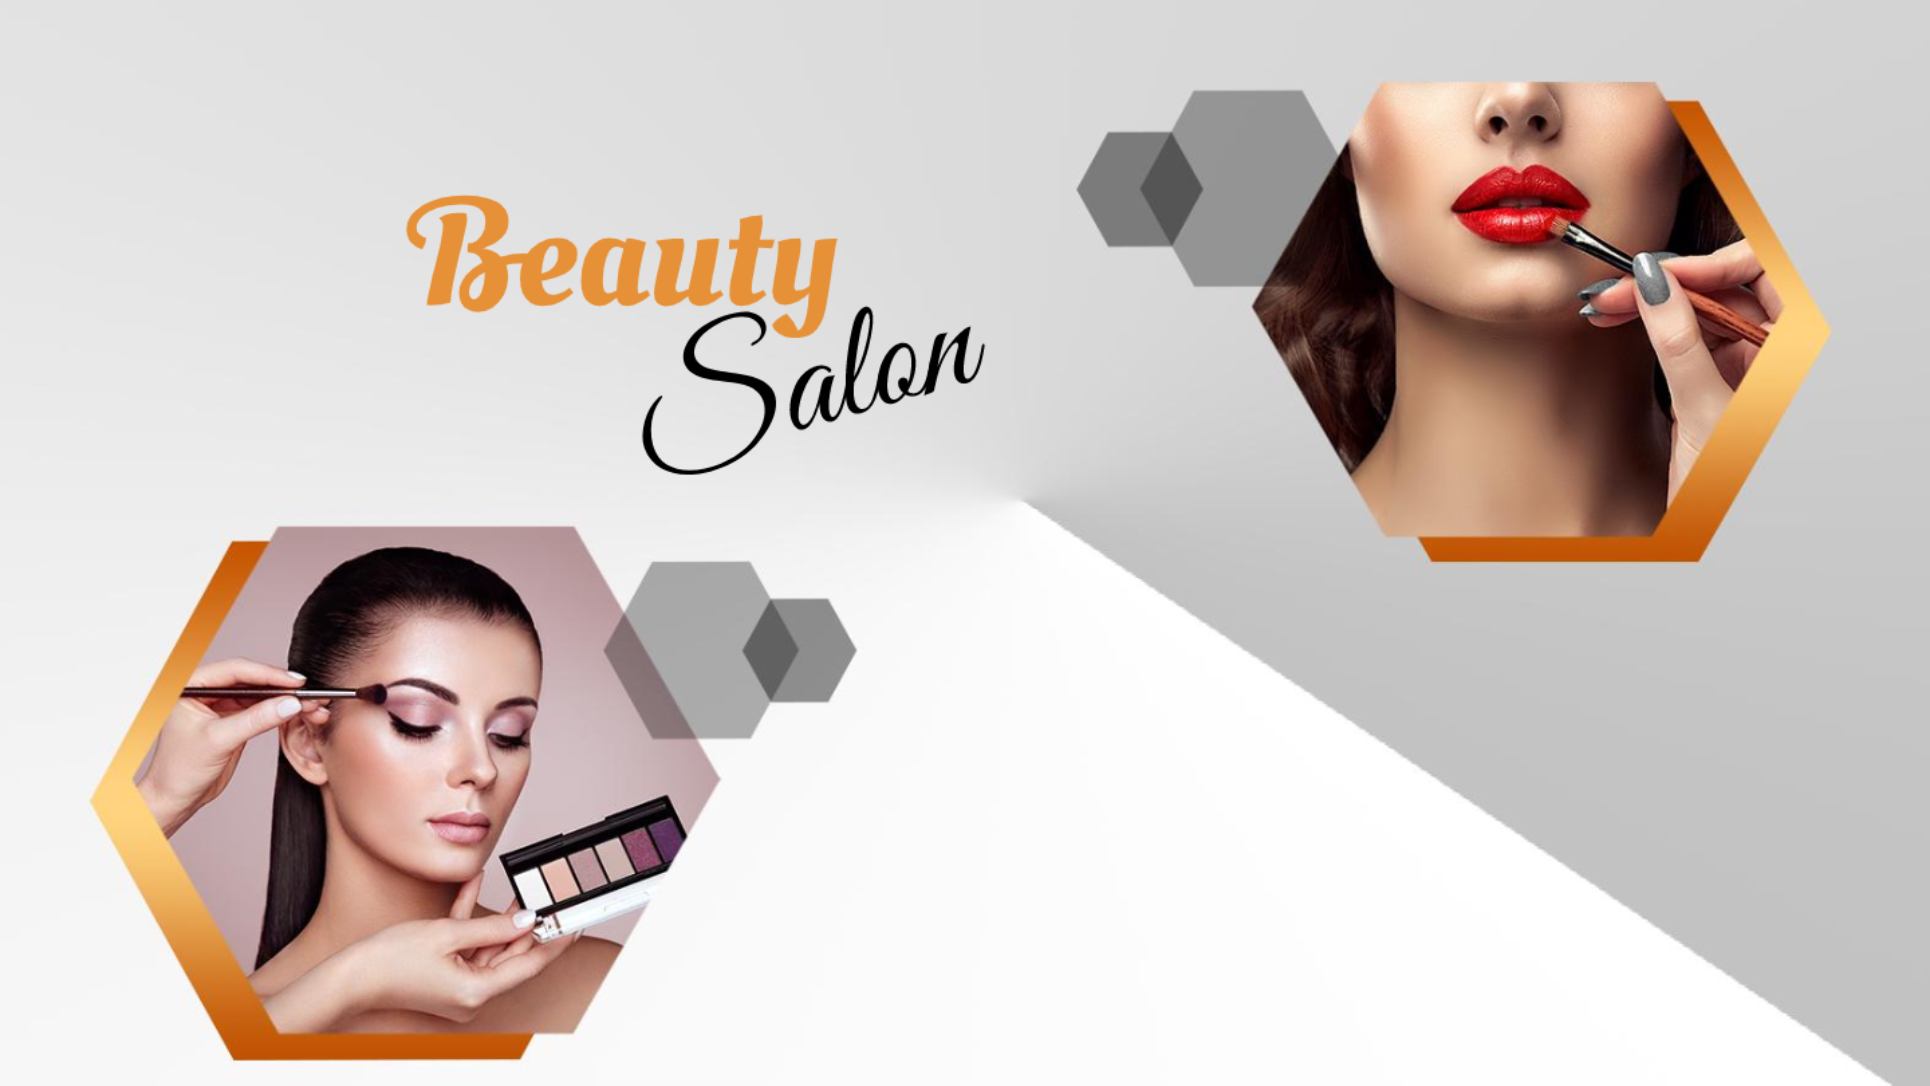 Beauty Salon Template for Google Slides